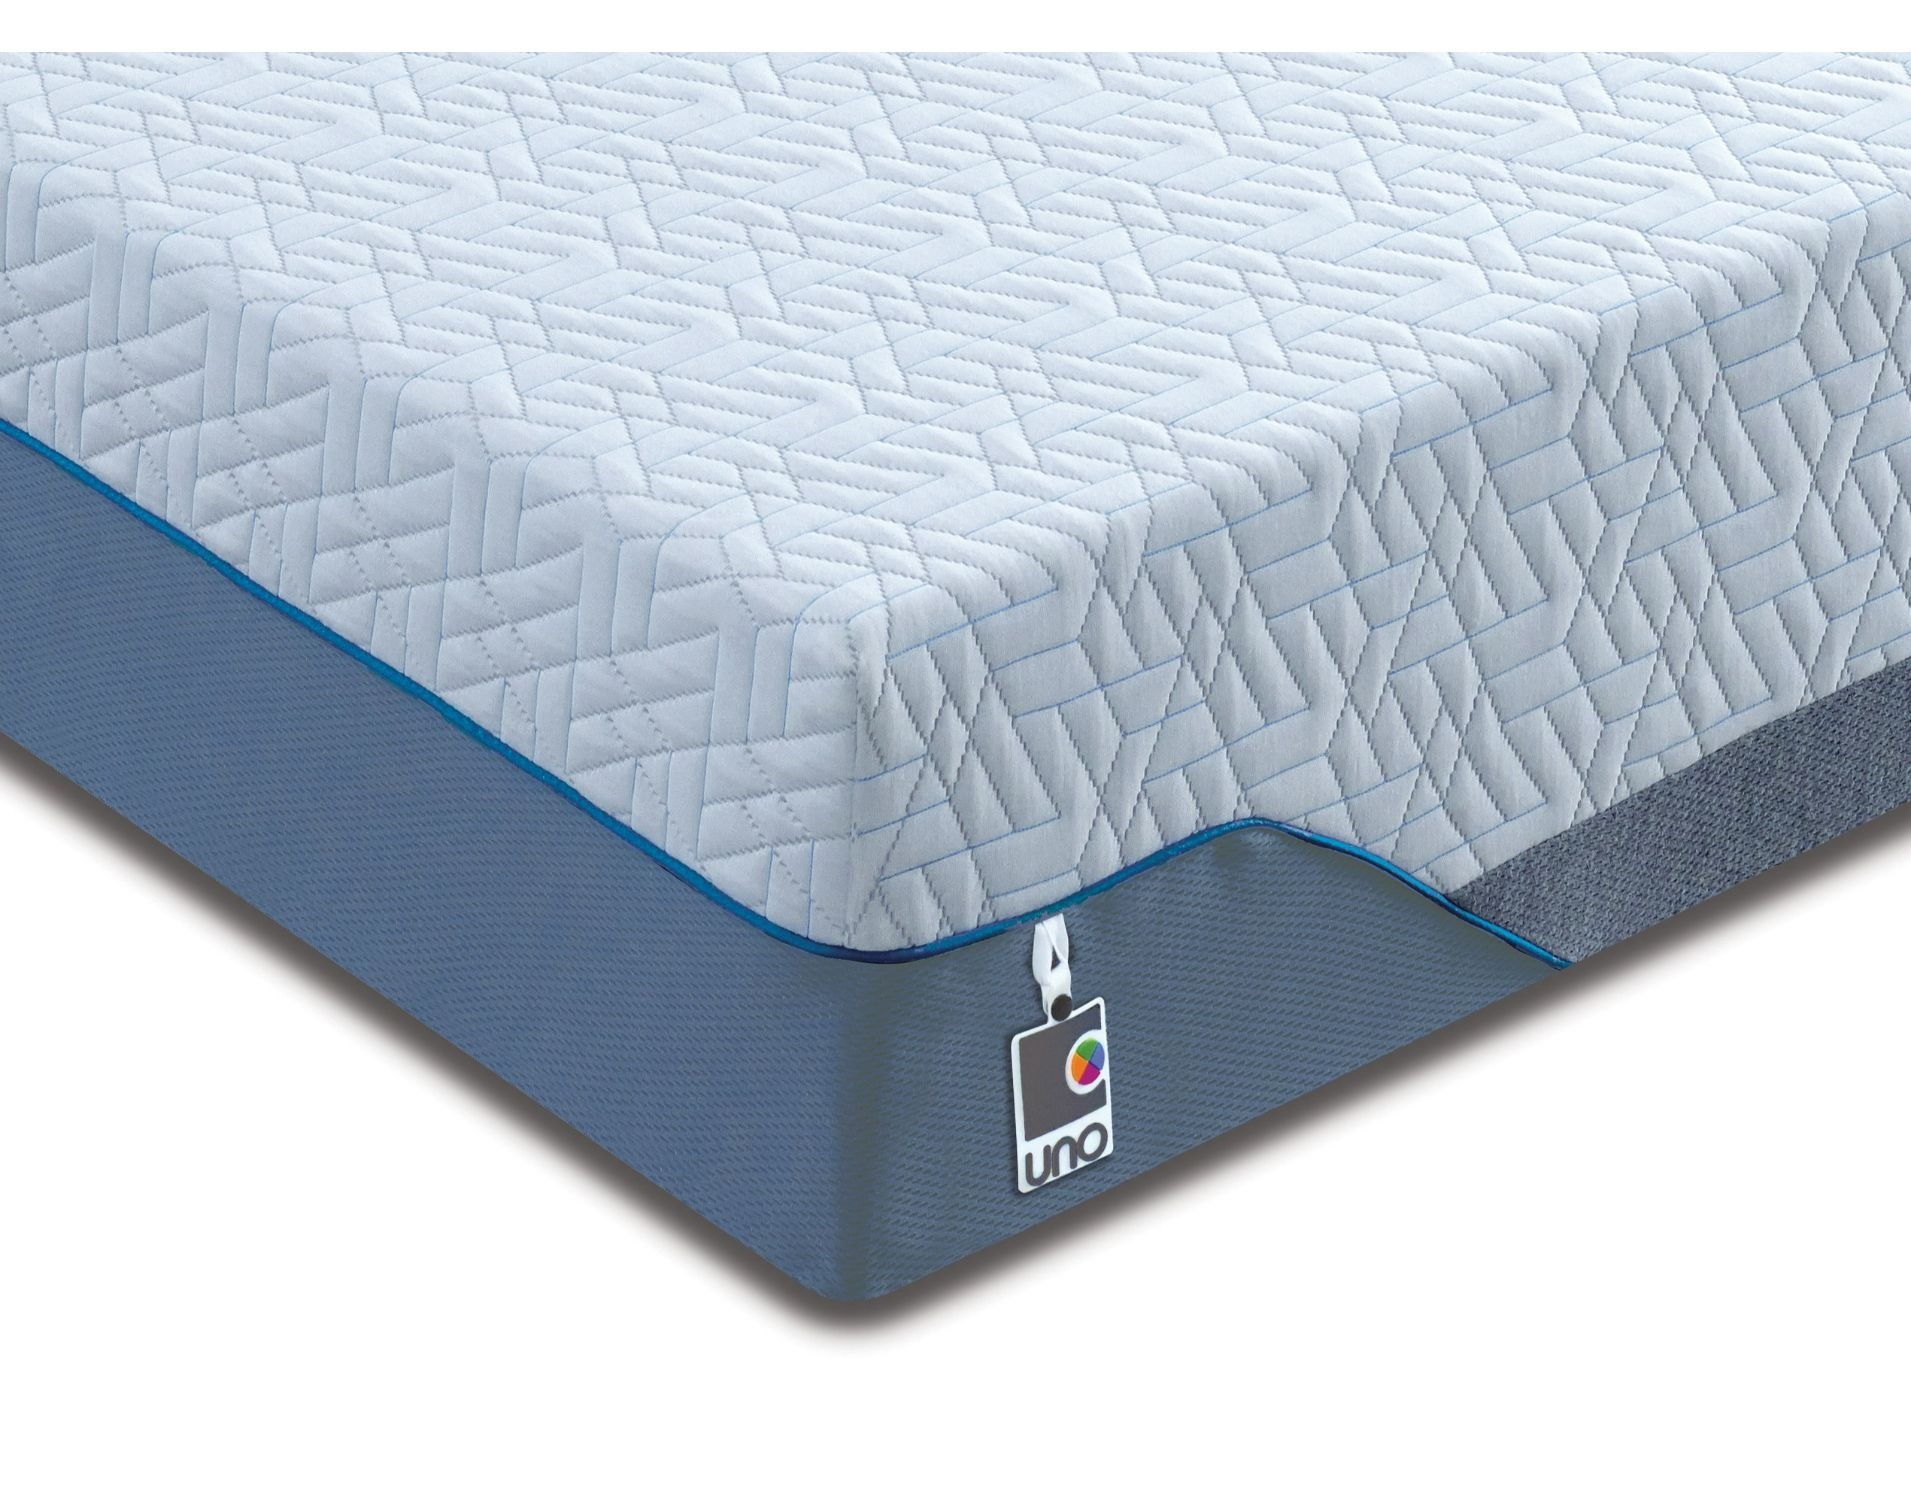 sleep soul comfort 800 pocket spring mattress